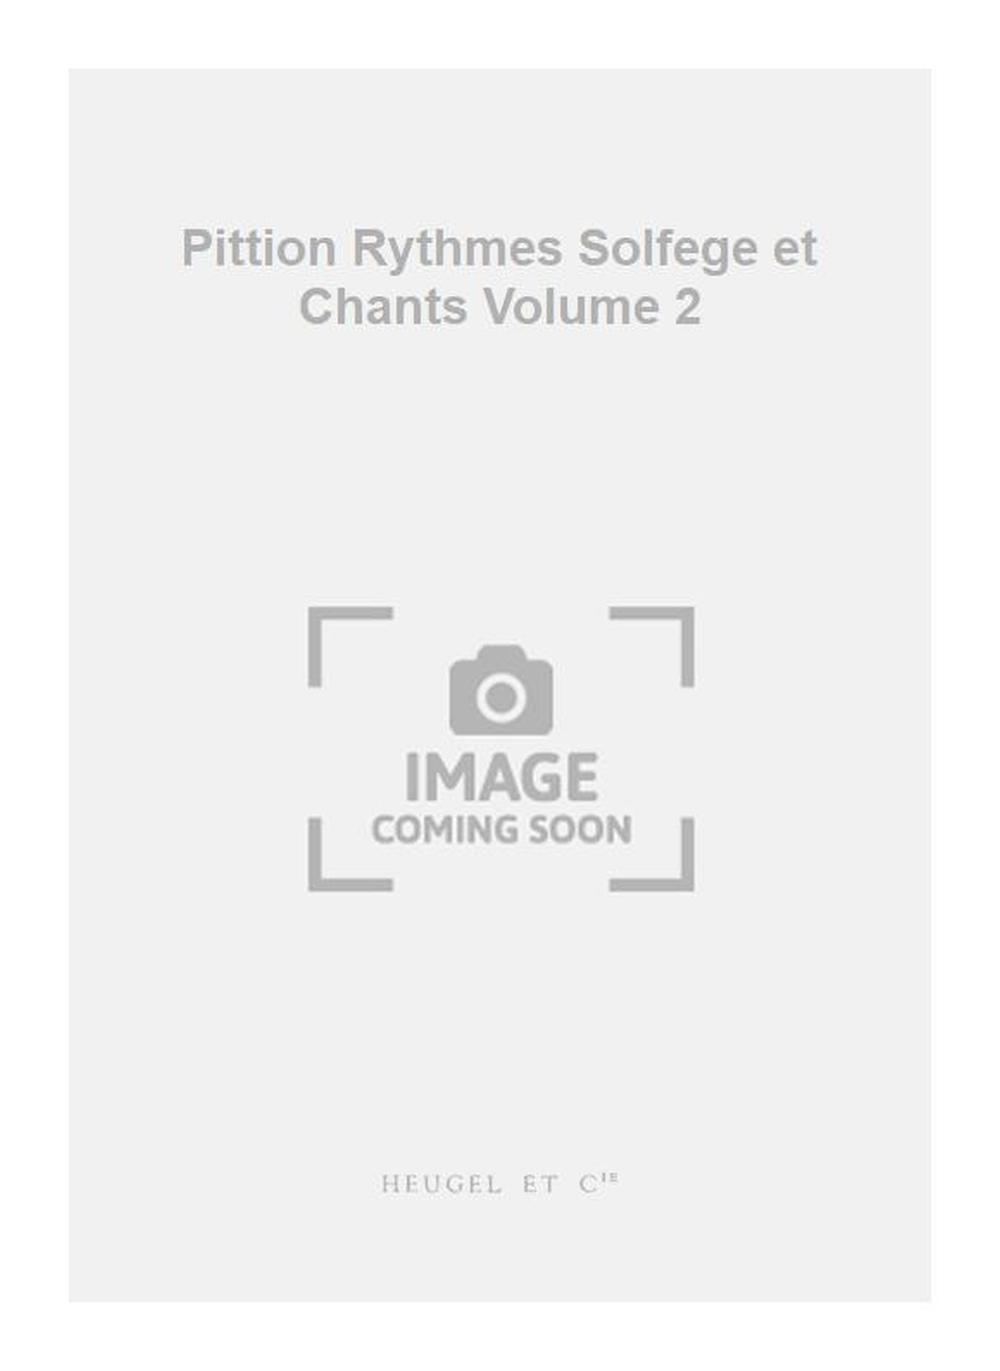 Pittion: Pittion Rythmes Solfege et Chants Volume 2